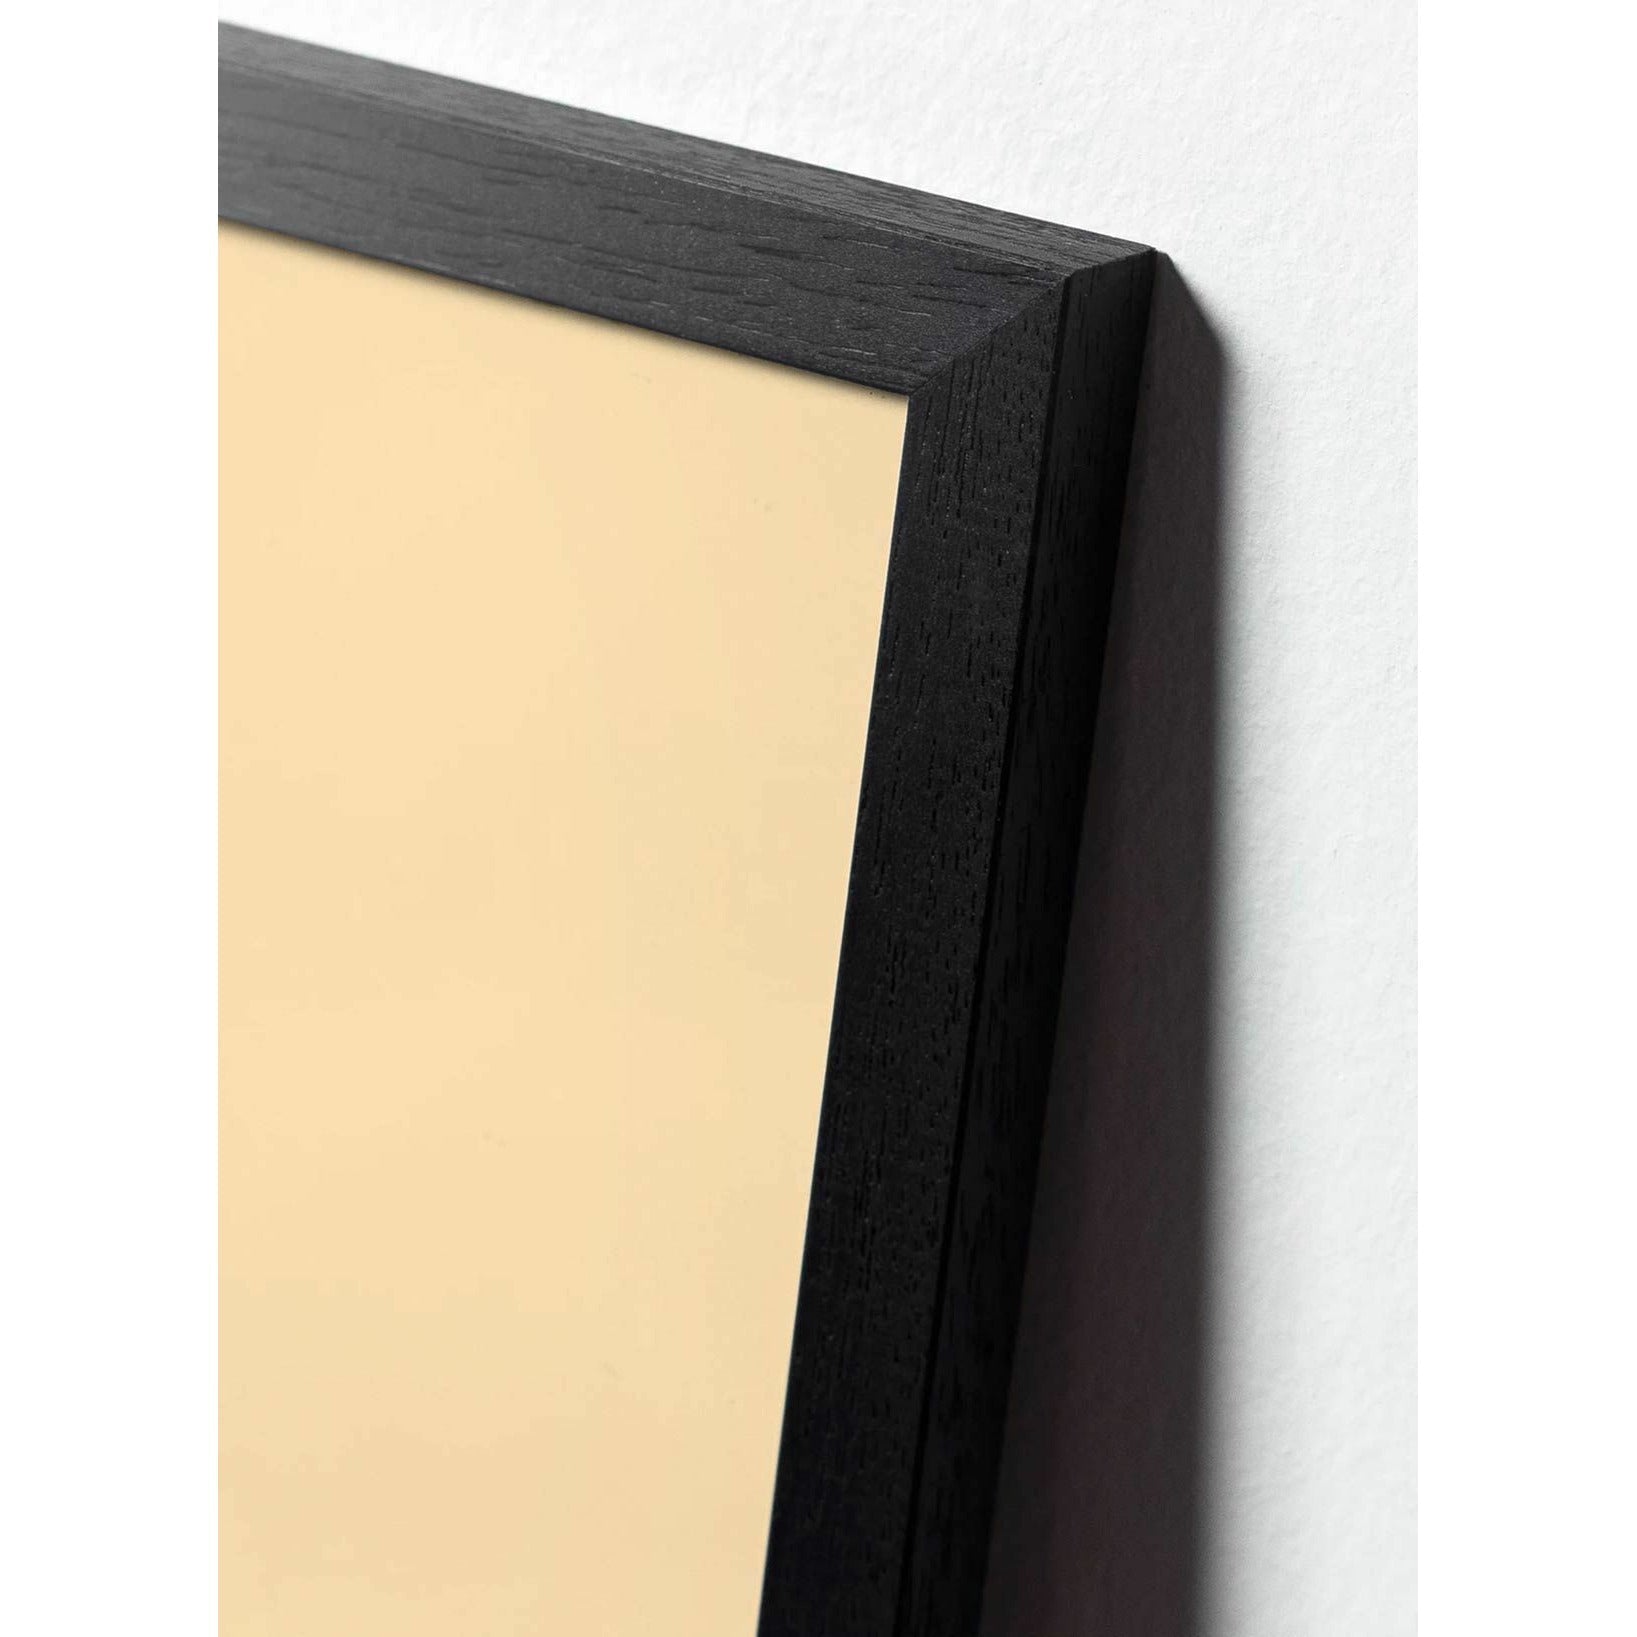 Brainchild Design Icon Poster, Frame In Black Lacquered Wood 50x70 Cm, Colour